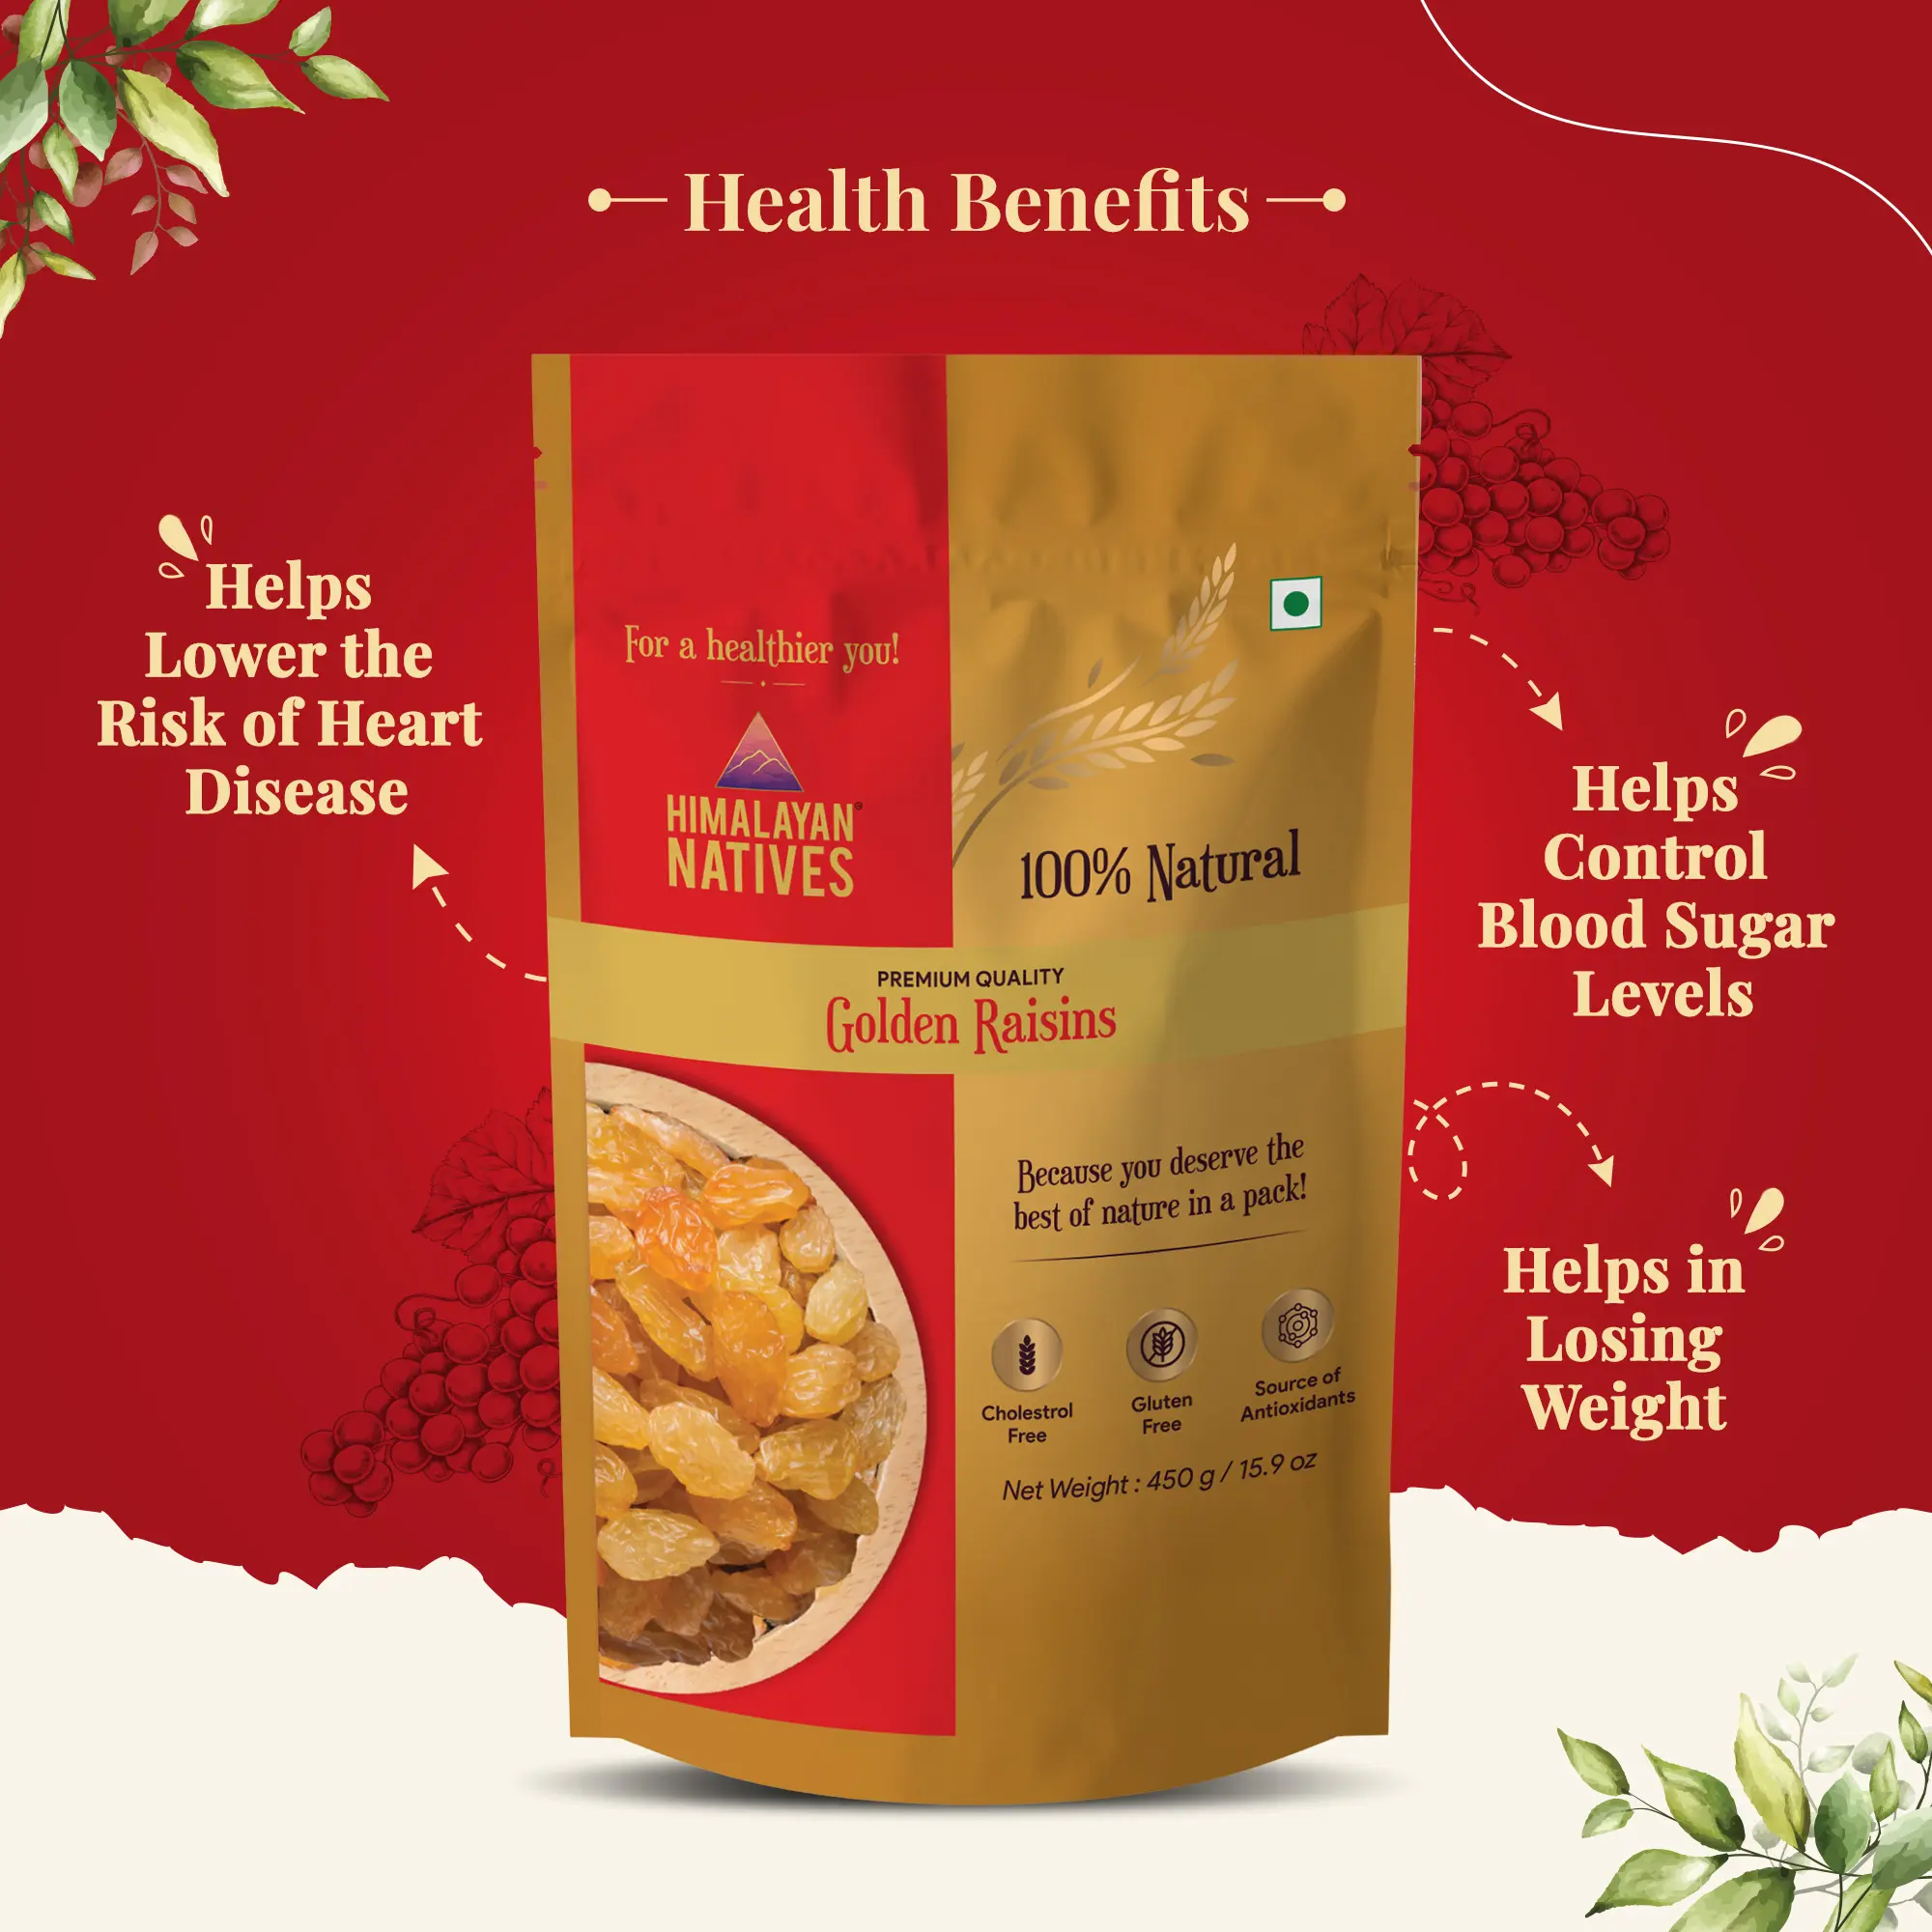 Health Benefits - Golden Raisins